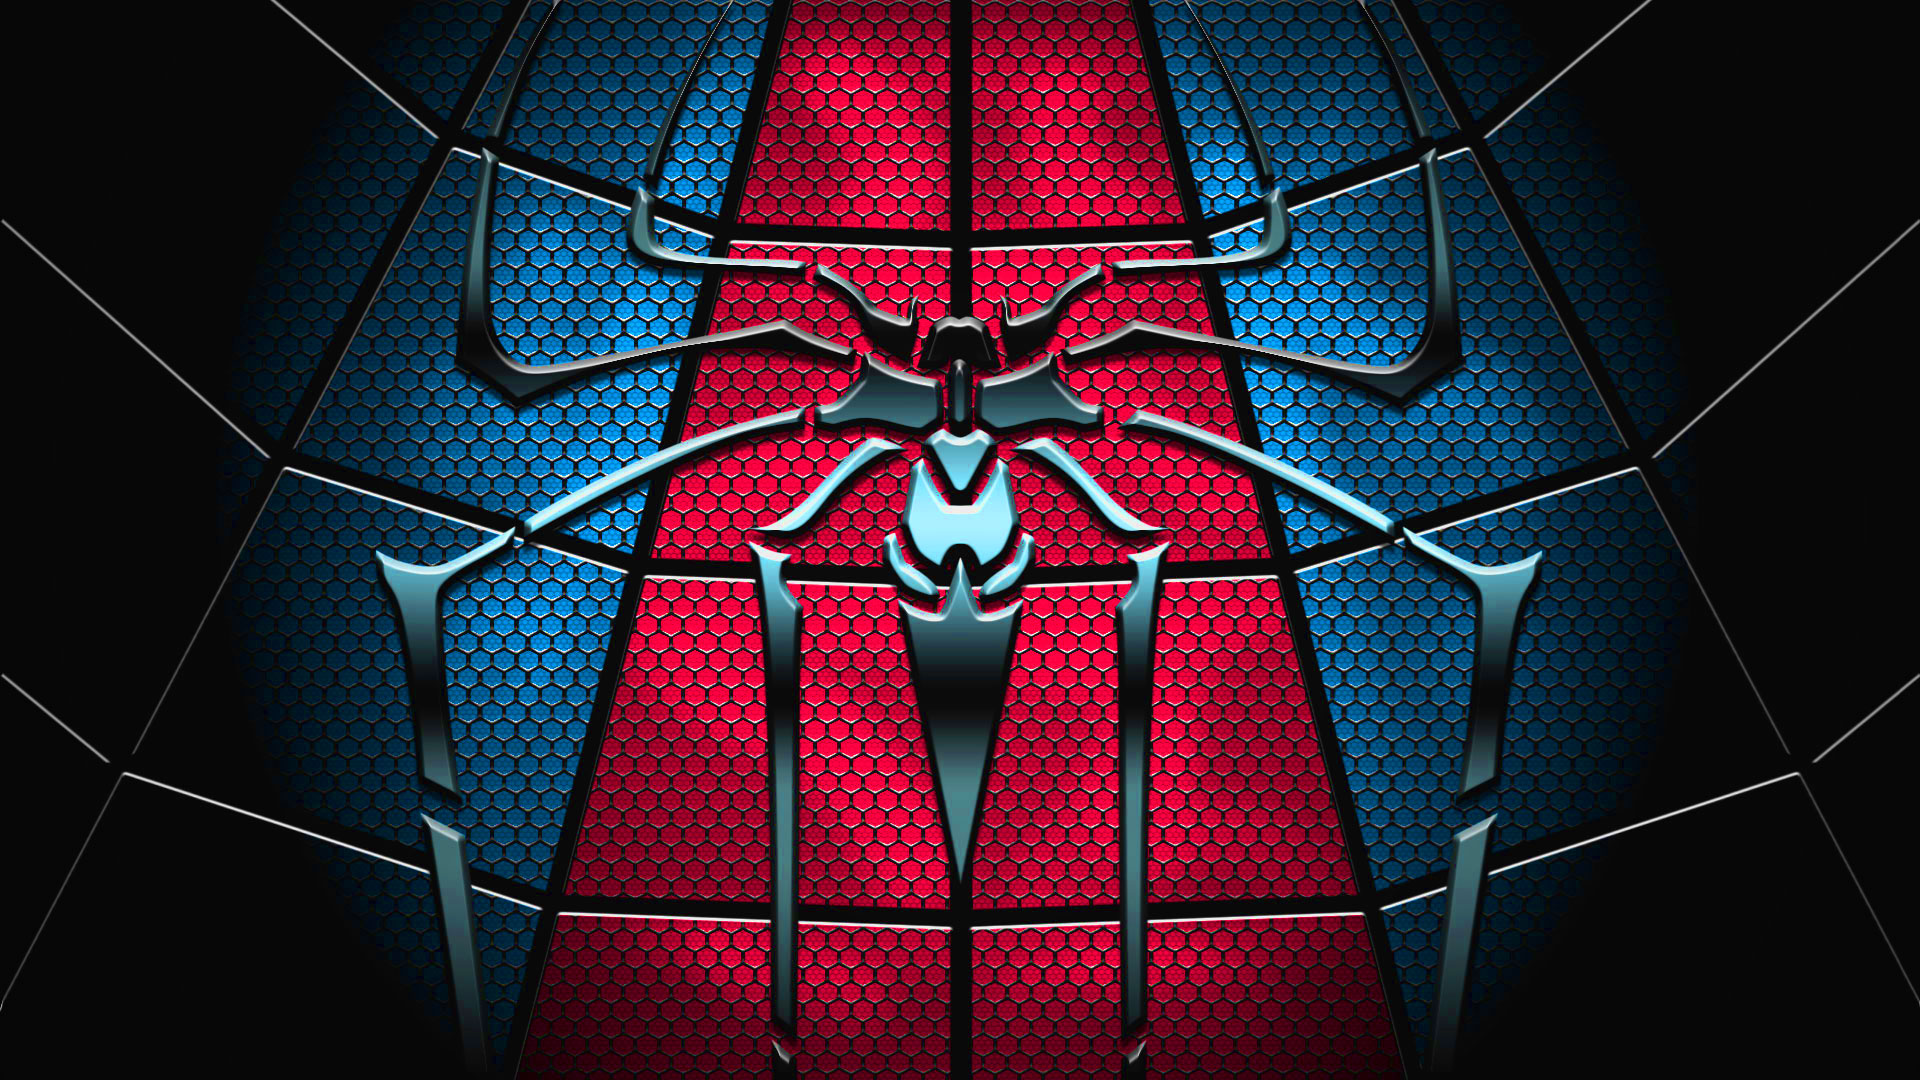 Spiderman symbol wallpaper hd spiderman-symbol-wallpaper-hd ? HD 